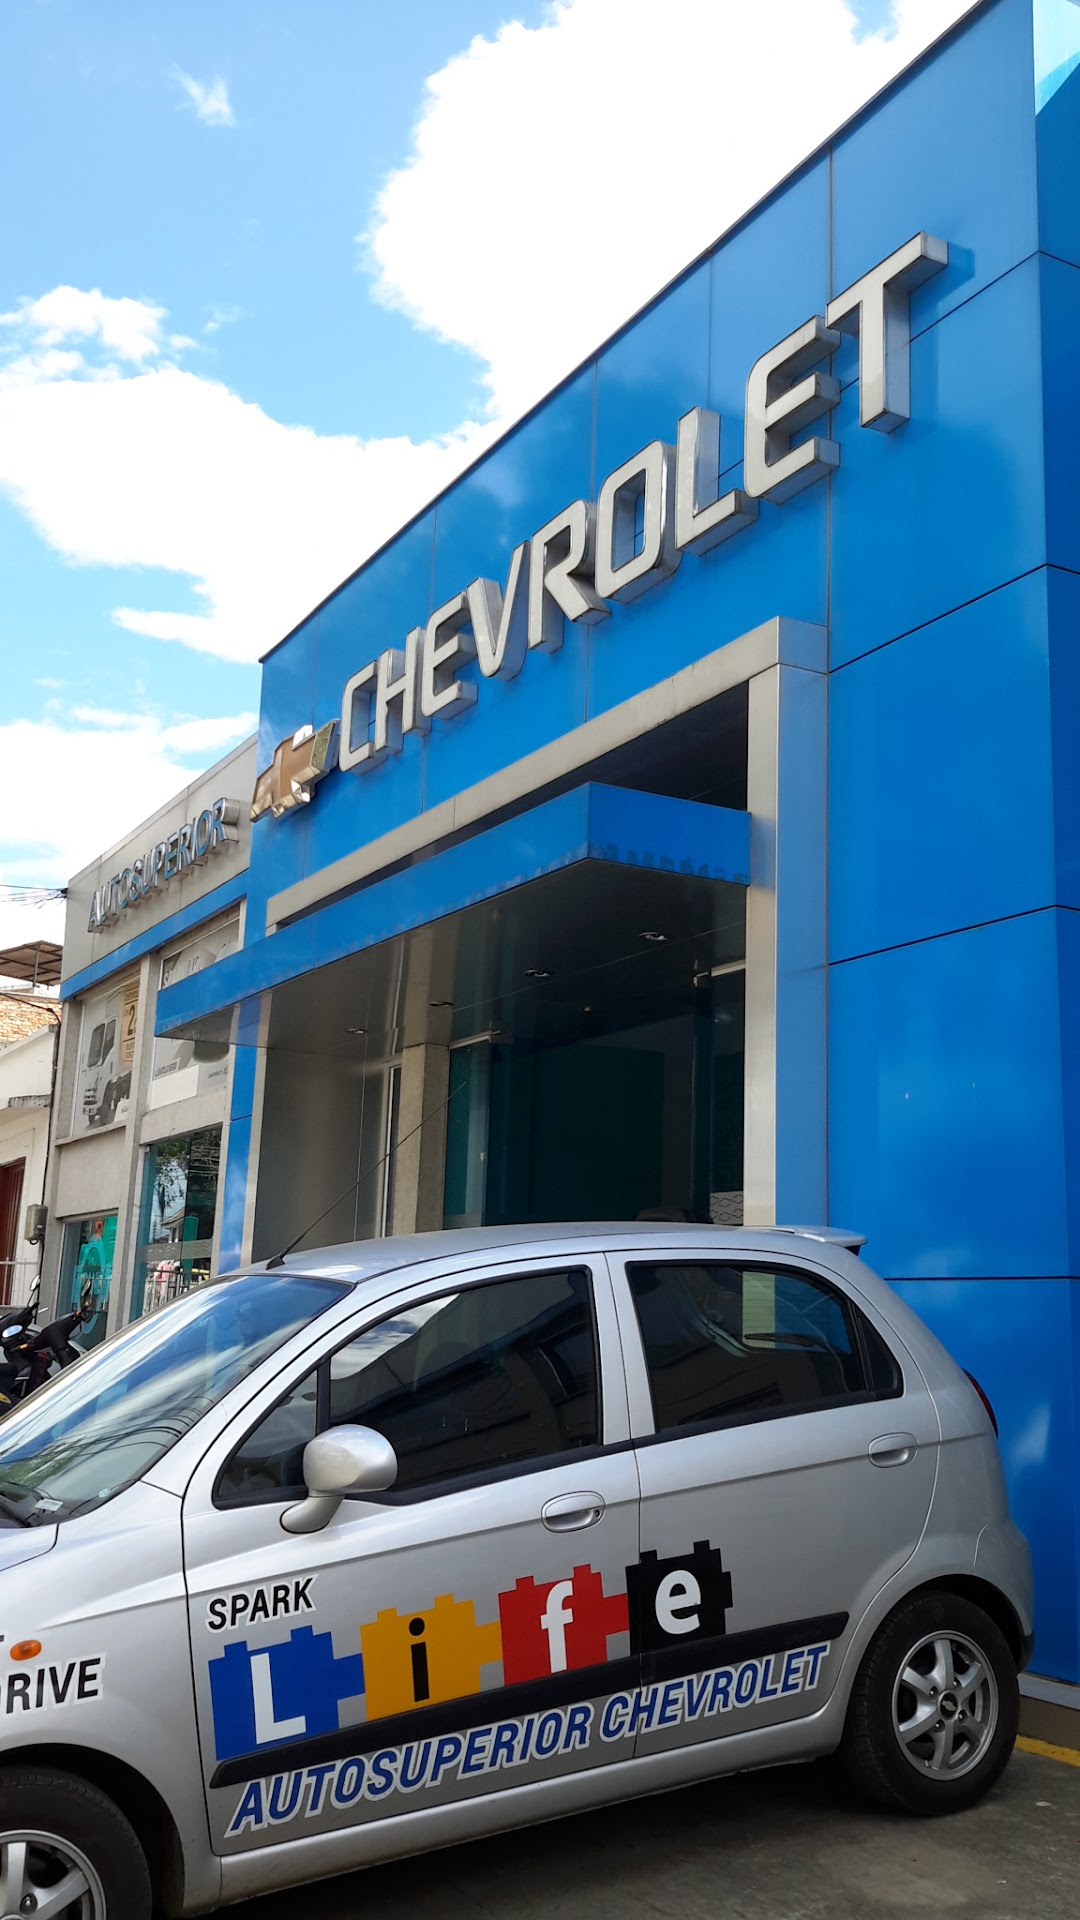 Autopacifico Chevrolet